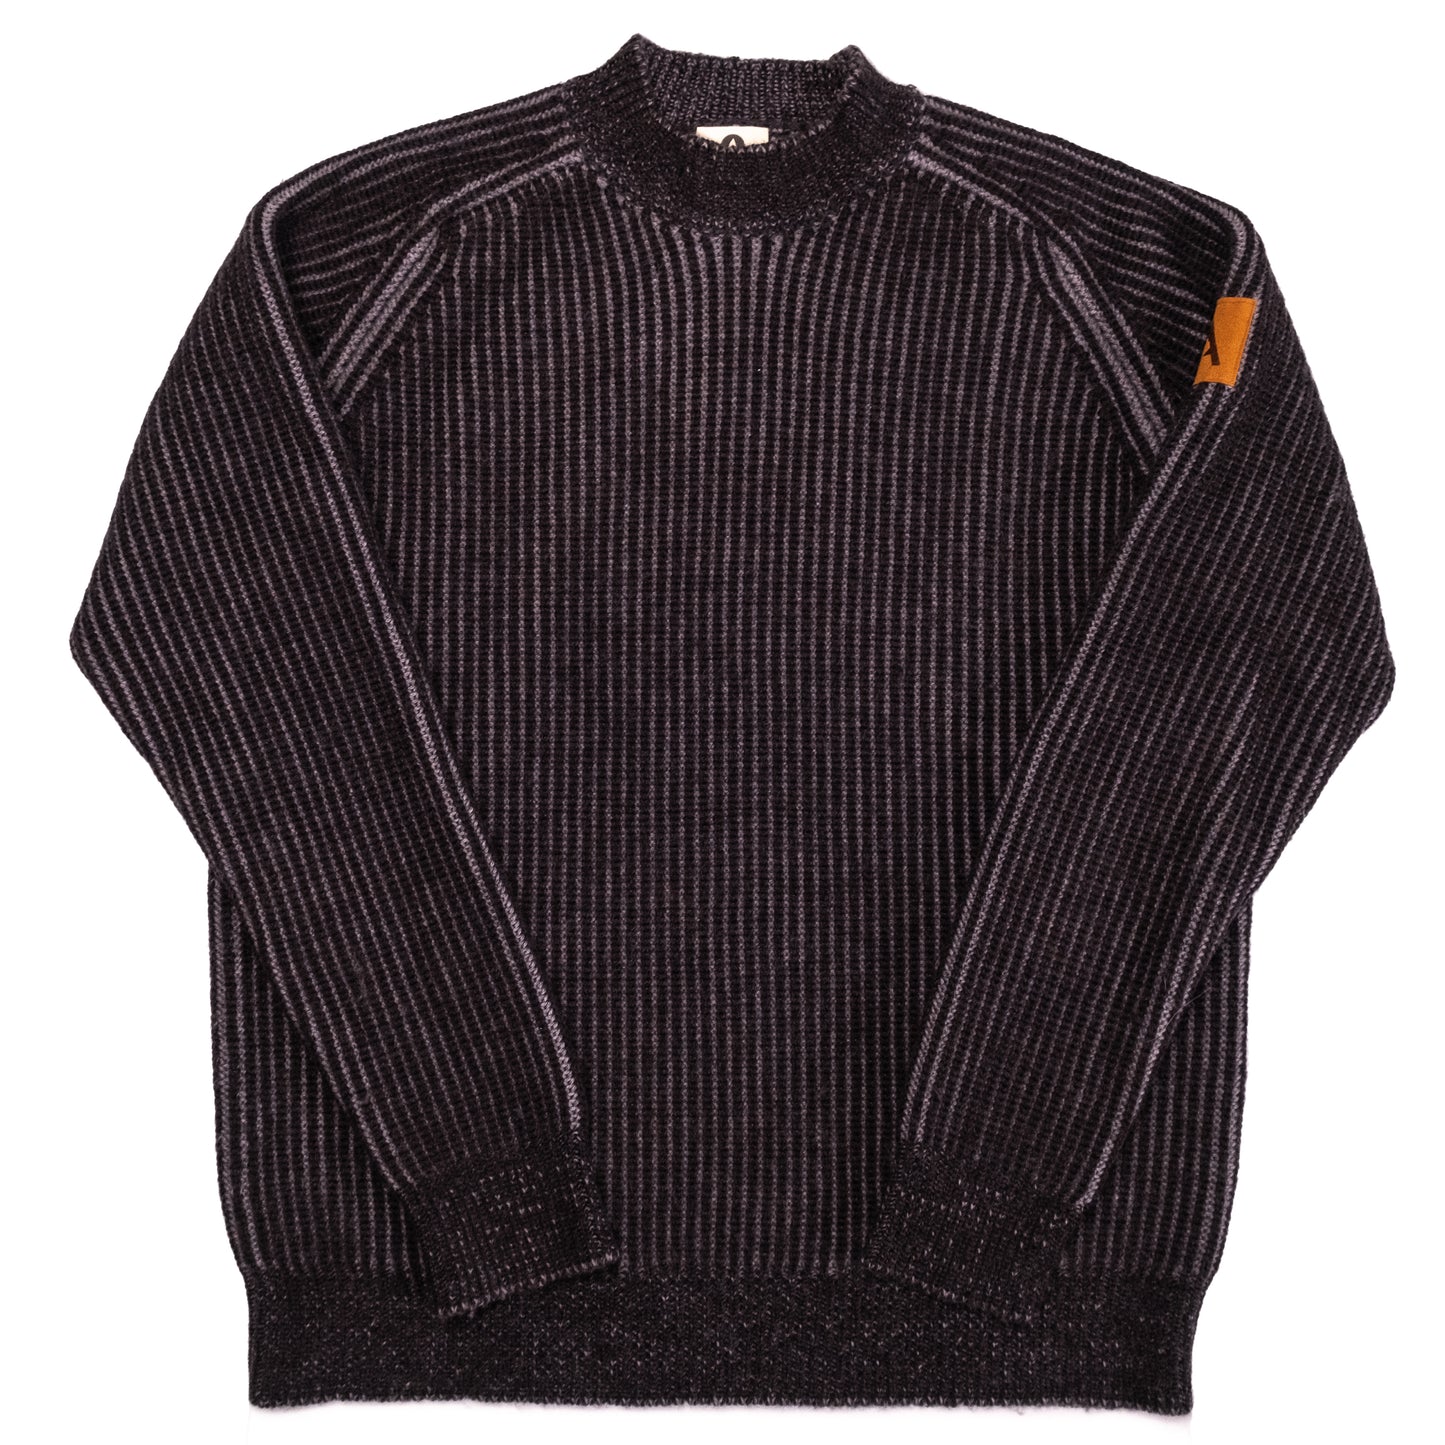 Men's Vista Merino Wool Sweater - Charcoal / Light Grey